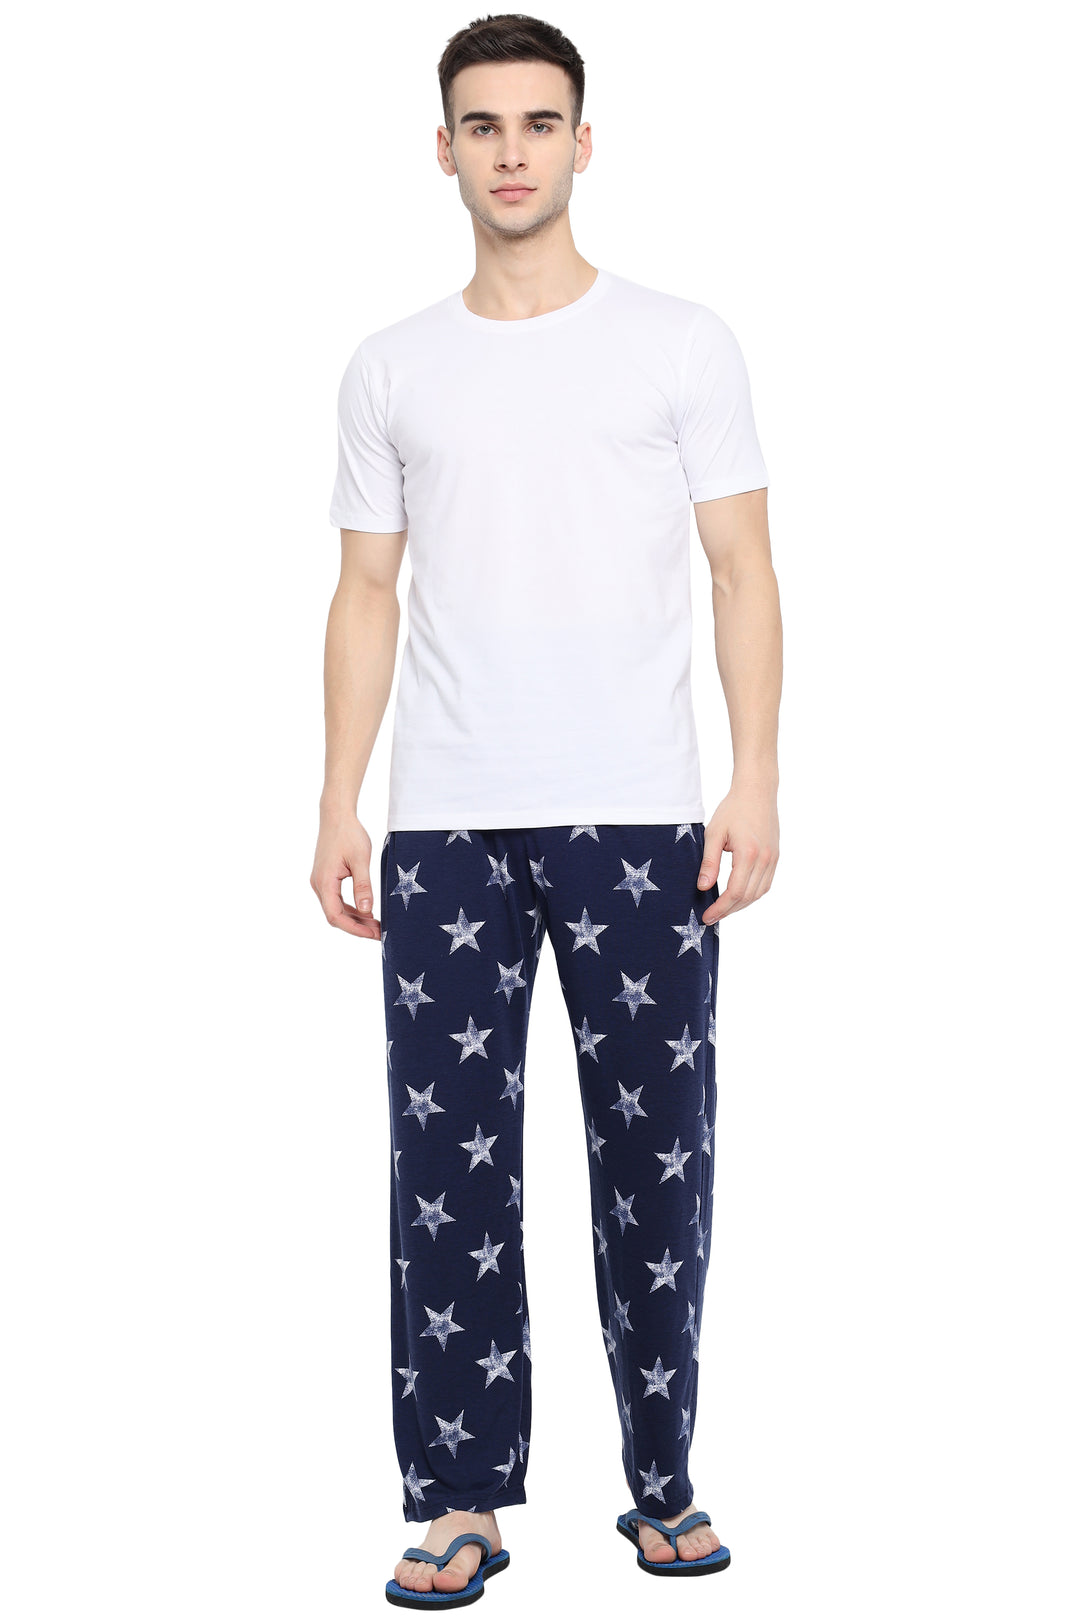 Blue Color Star Printed Pyjama